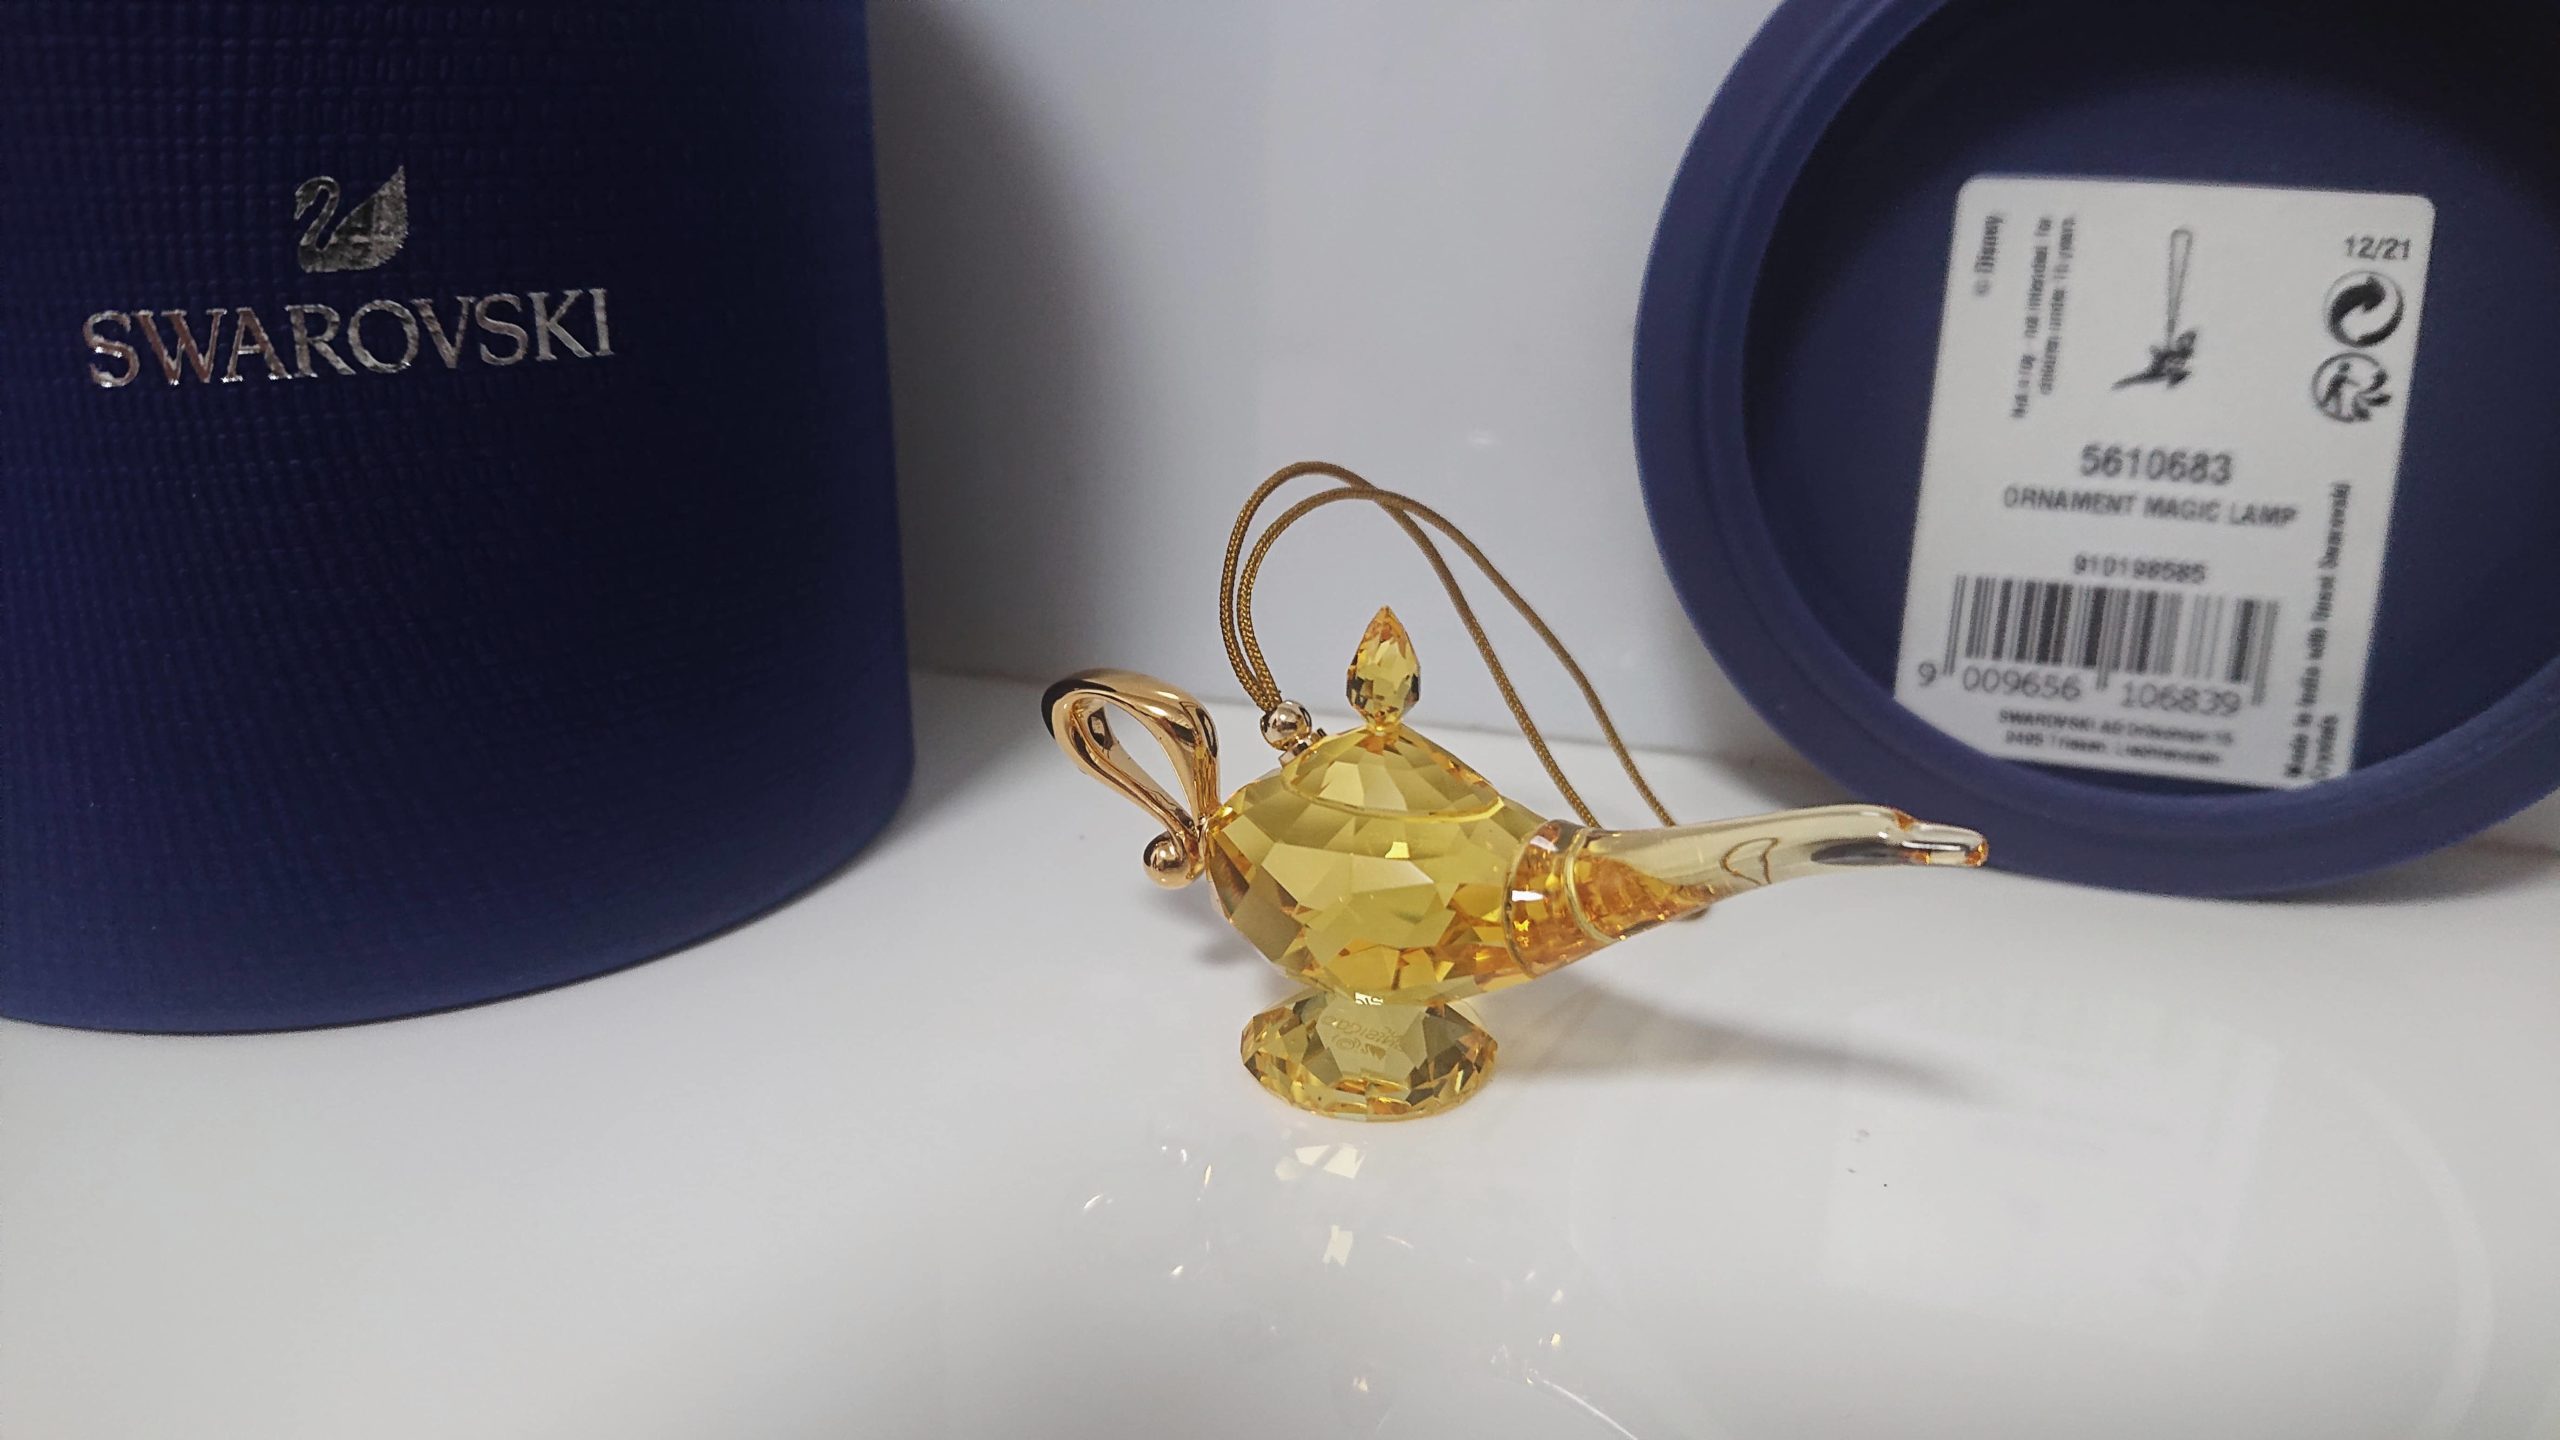 5610683 Ornament Disney Swarovski Sammler Magic Wunderlampe - Collectorshop Lamp Aladdin